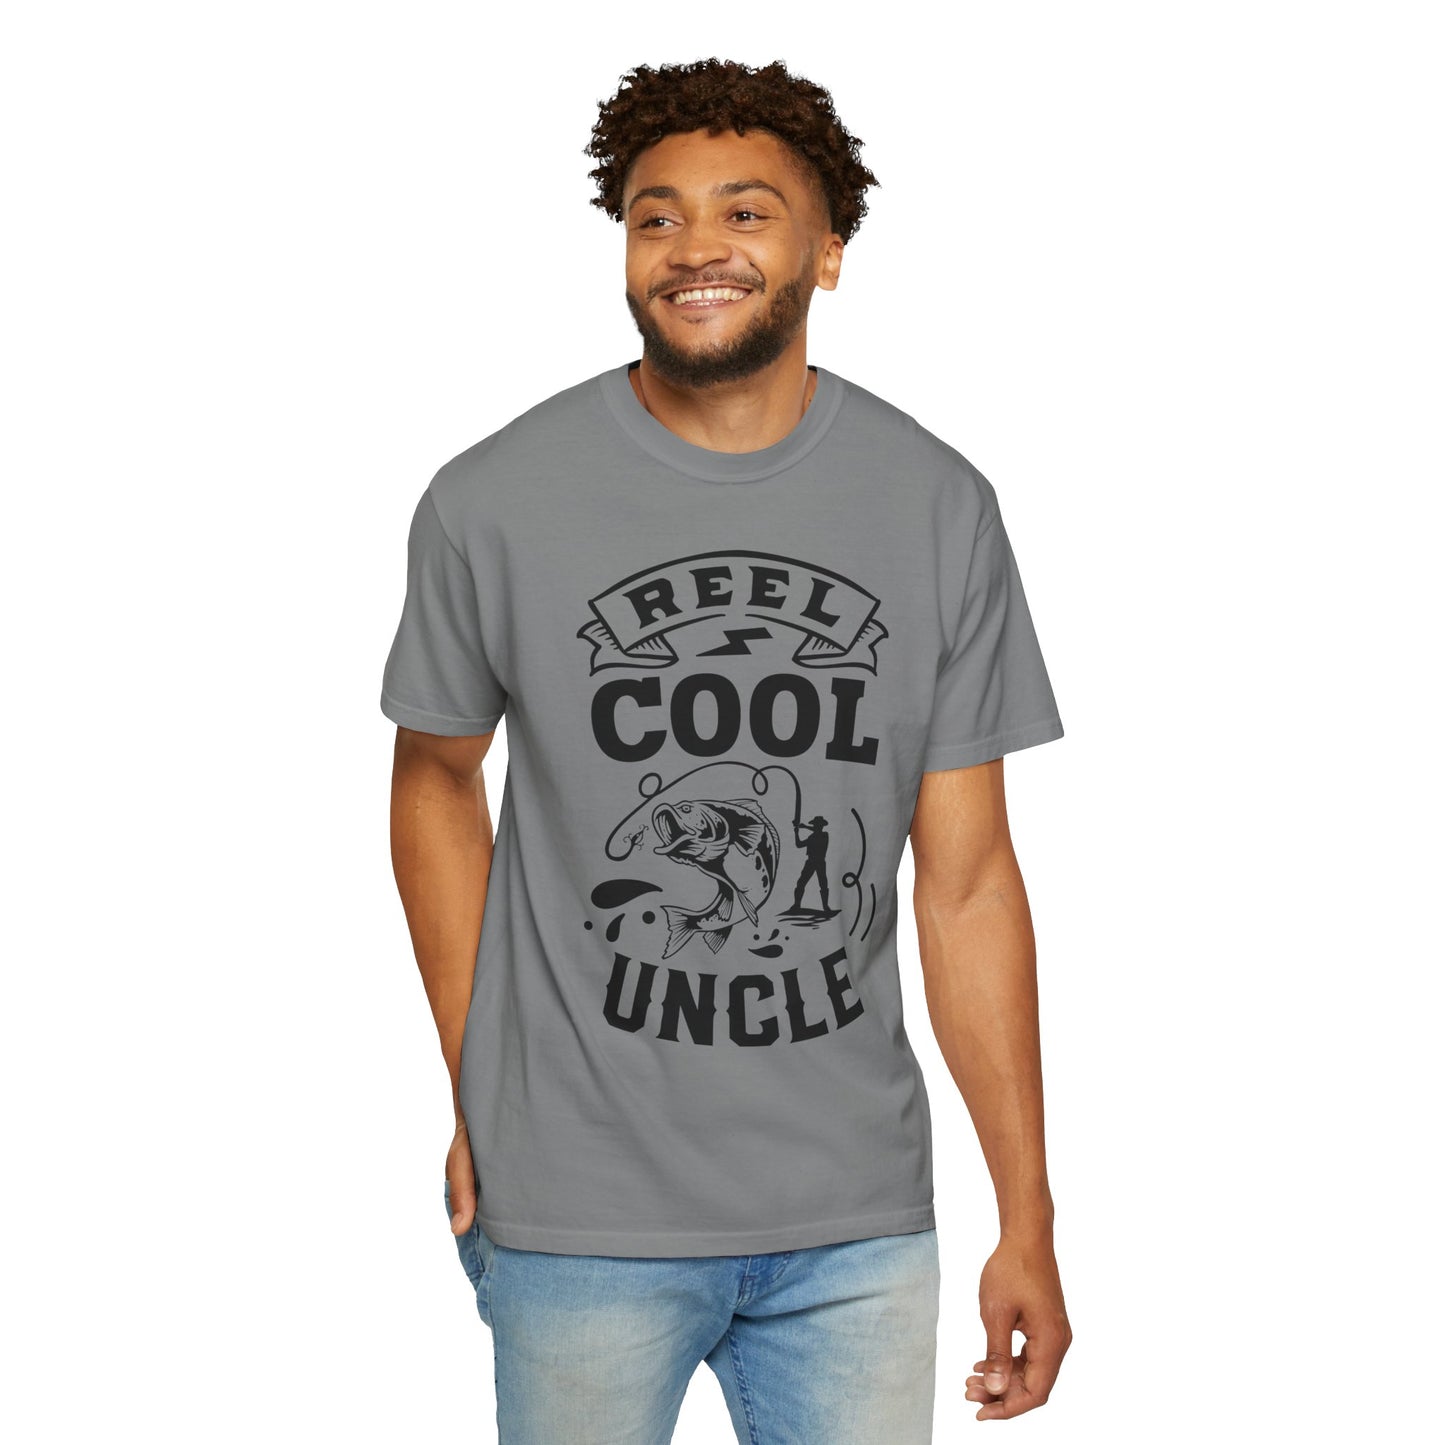 Reel cool uncle: Unisex Garment-Dyed T-shirt